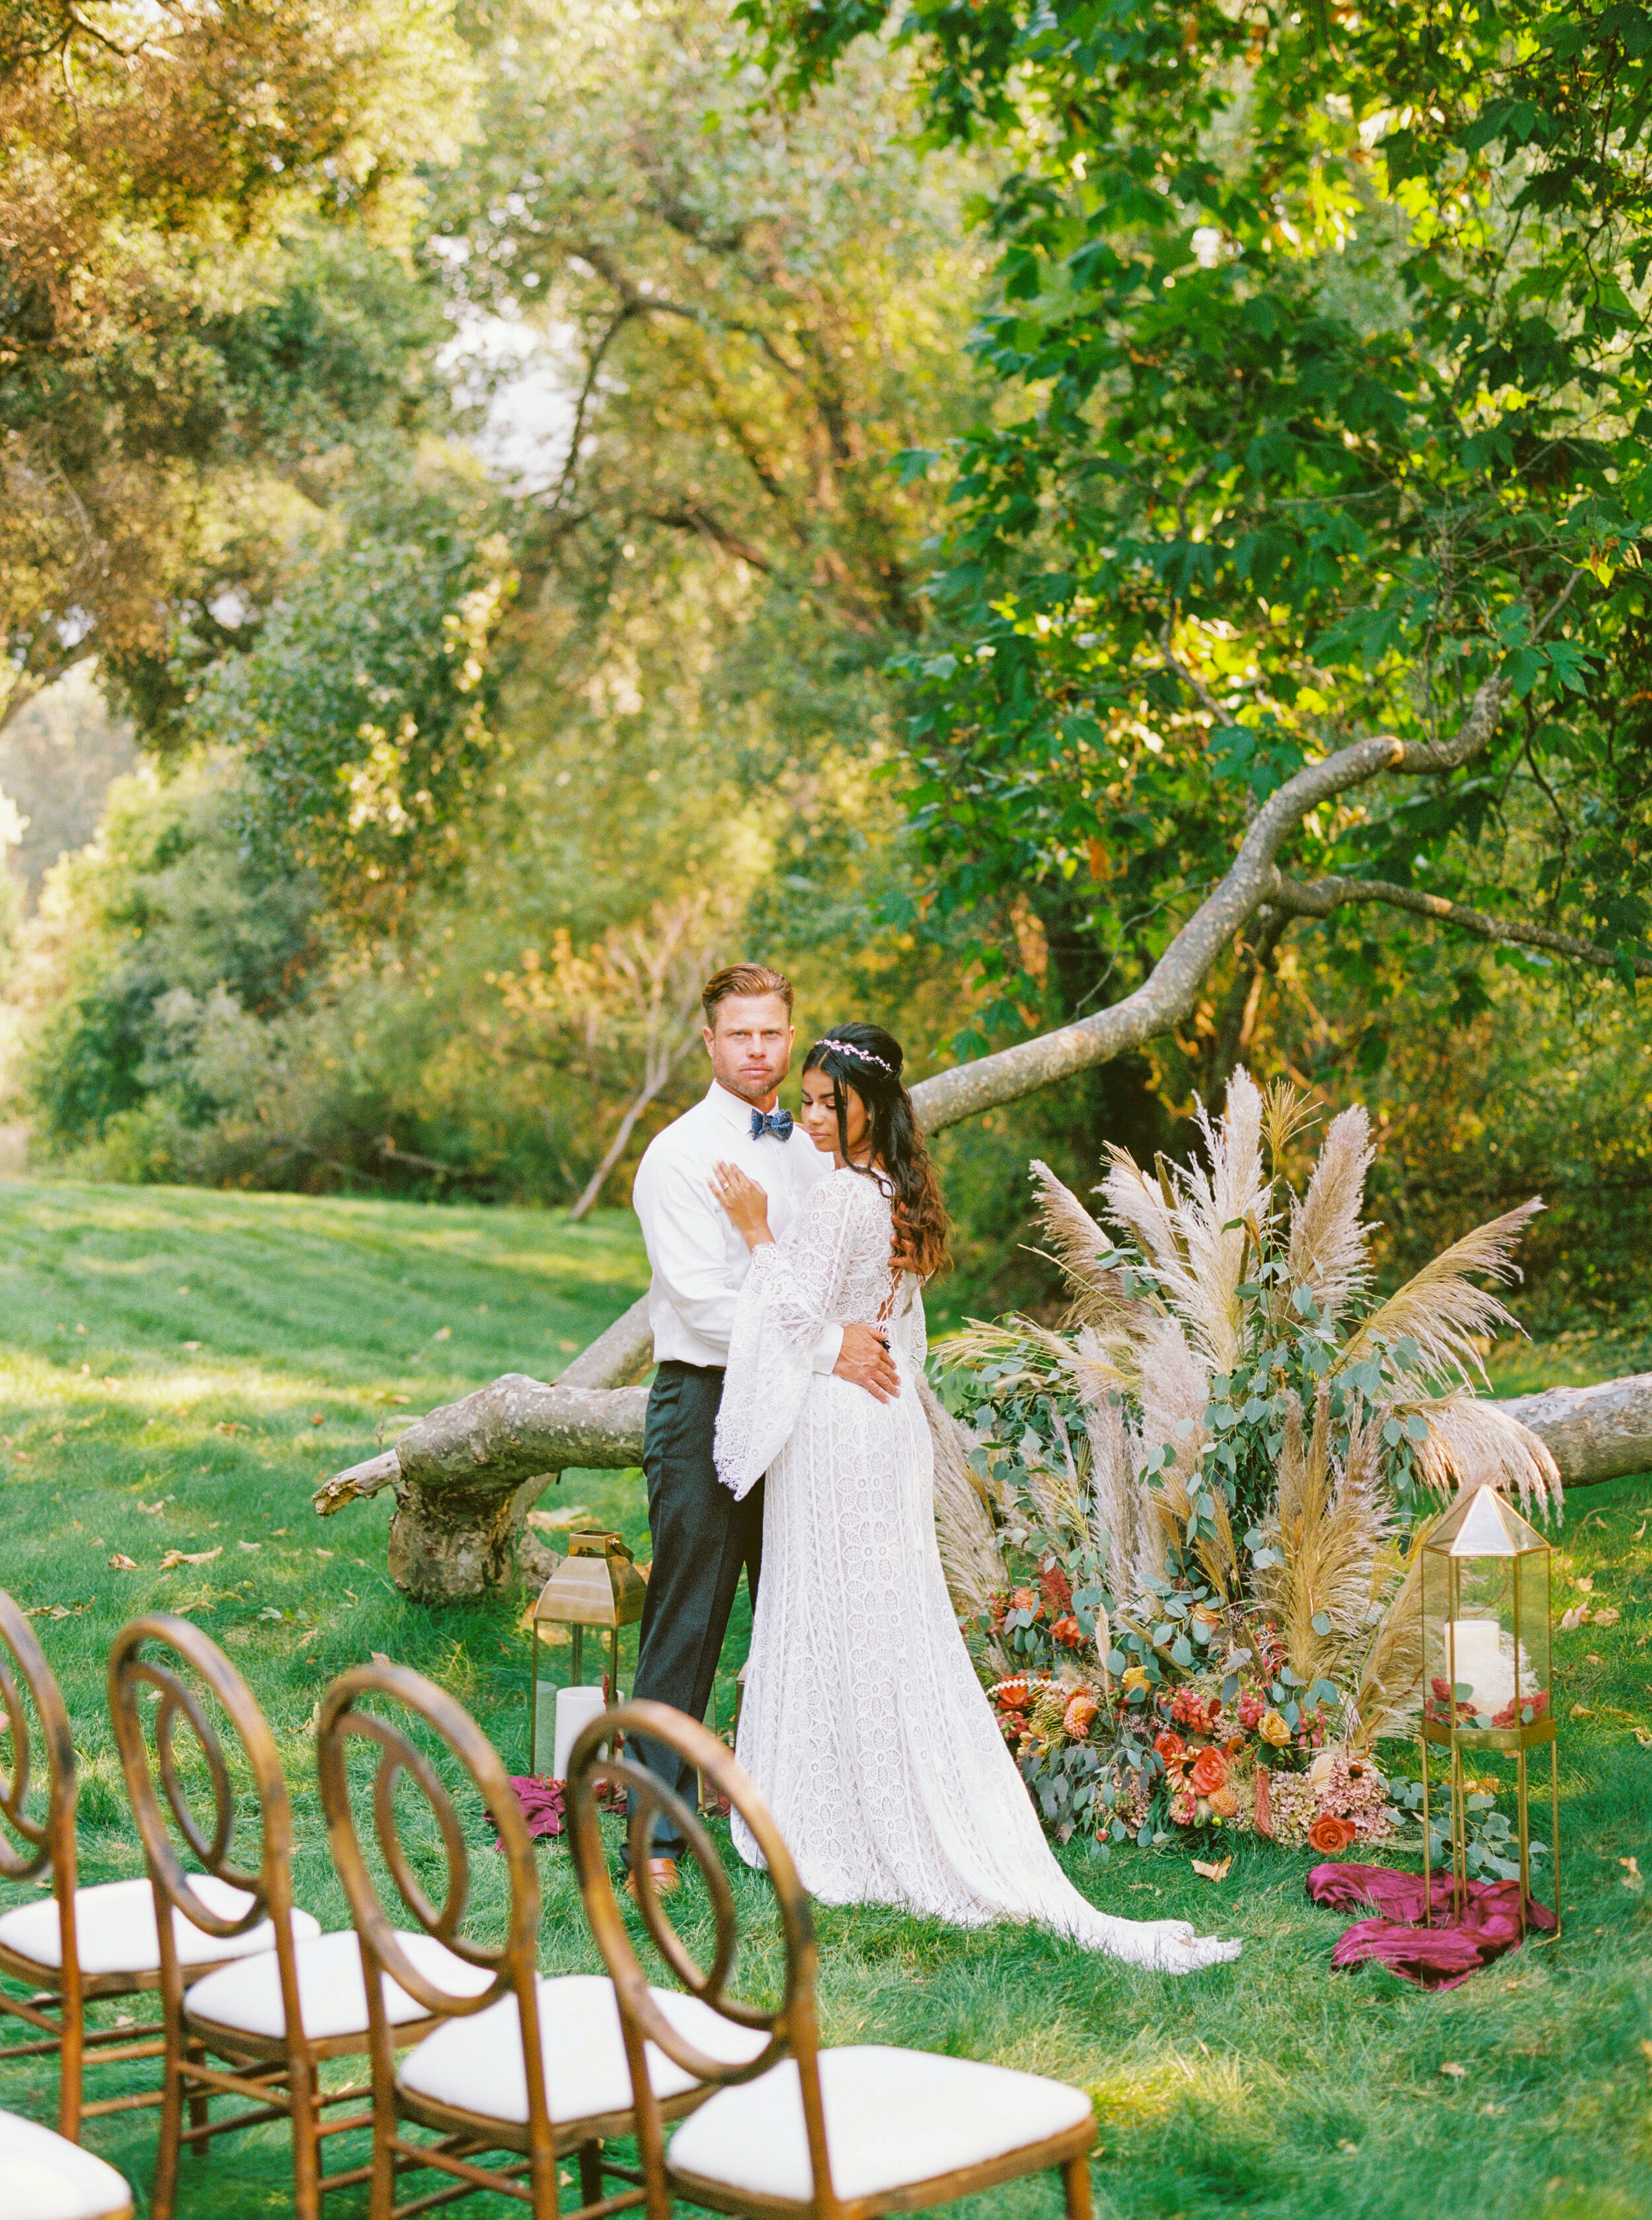 Sarahi Hadden - An Earthy Summer Boho Inspired Wedding with Sunset Hues at Gardener Ranch-105.jpg